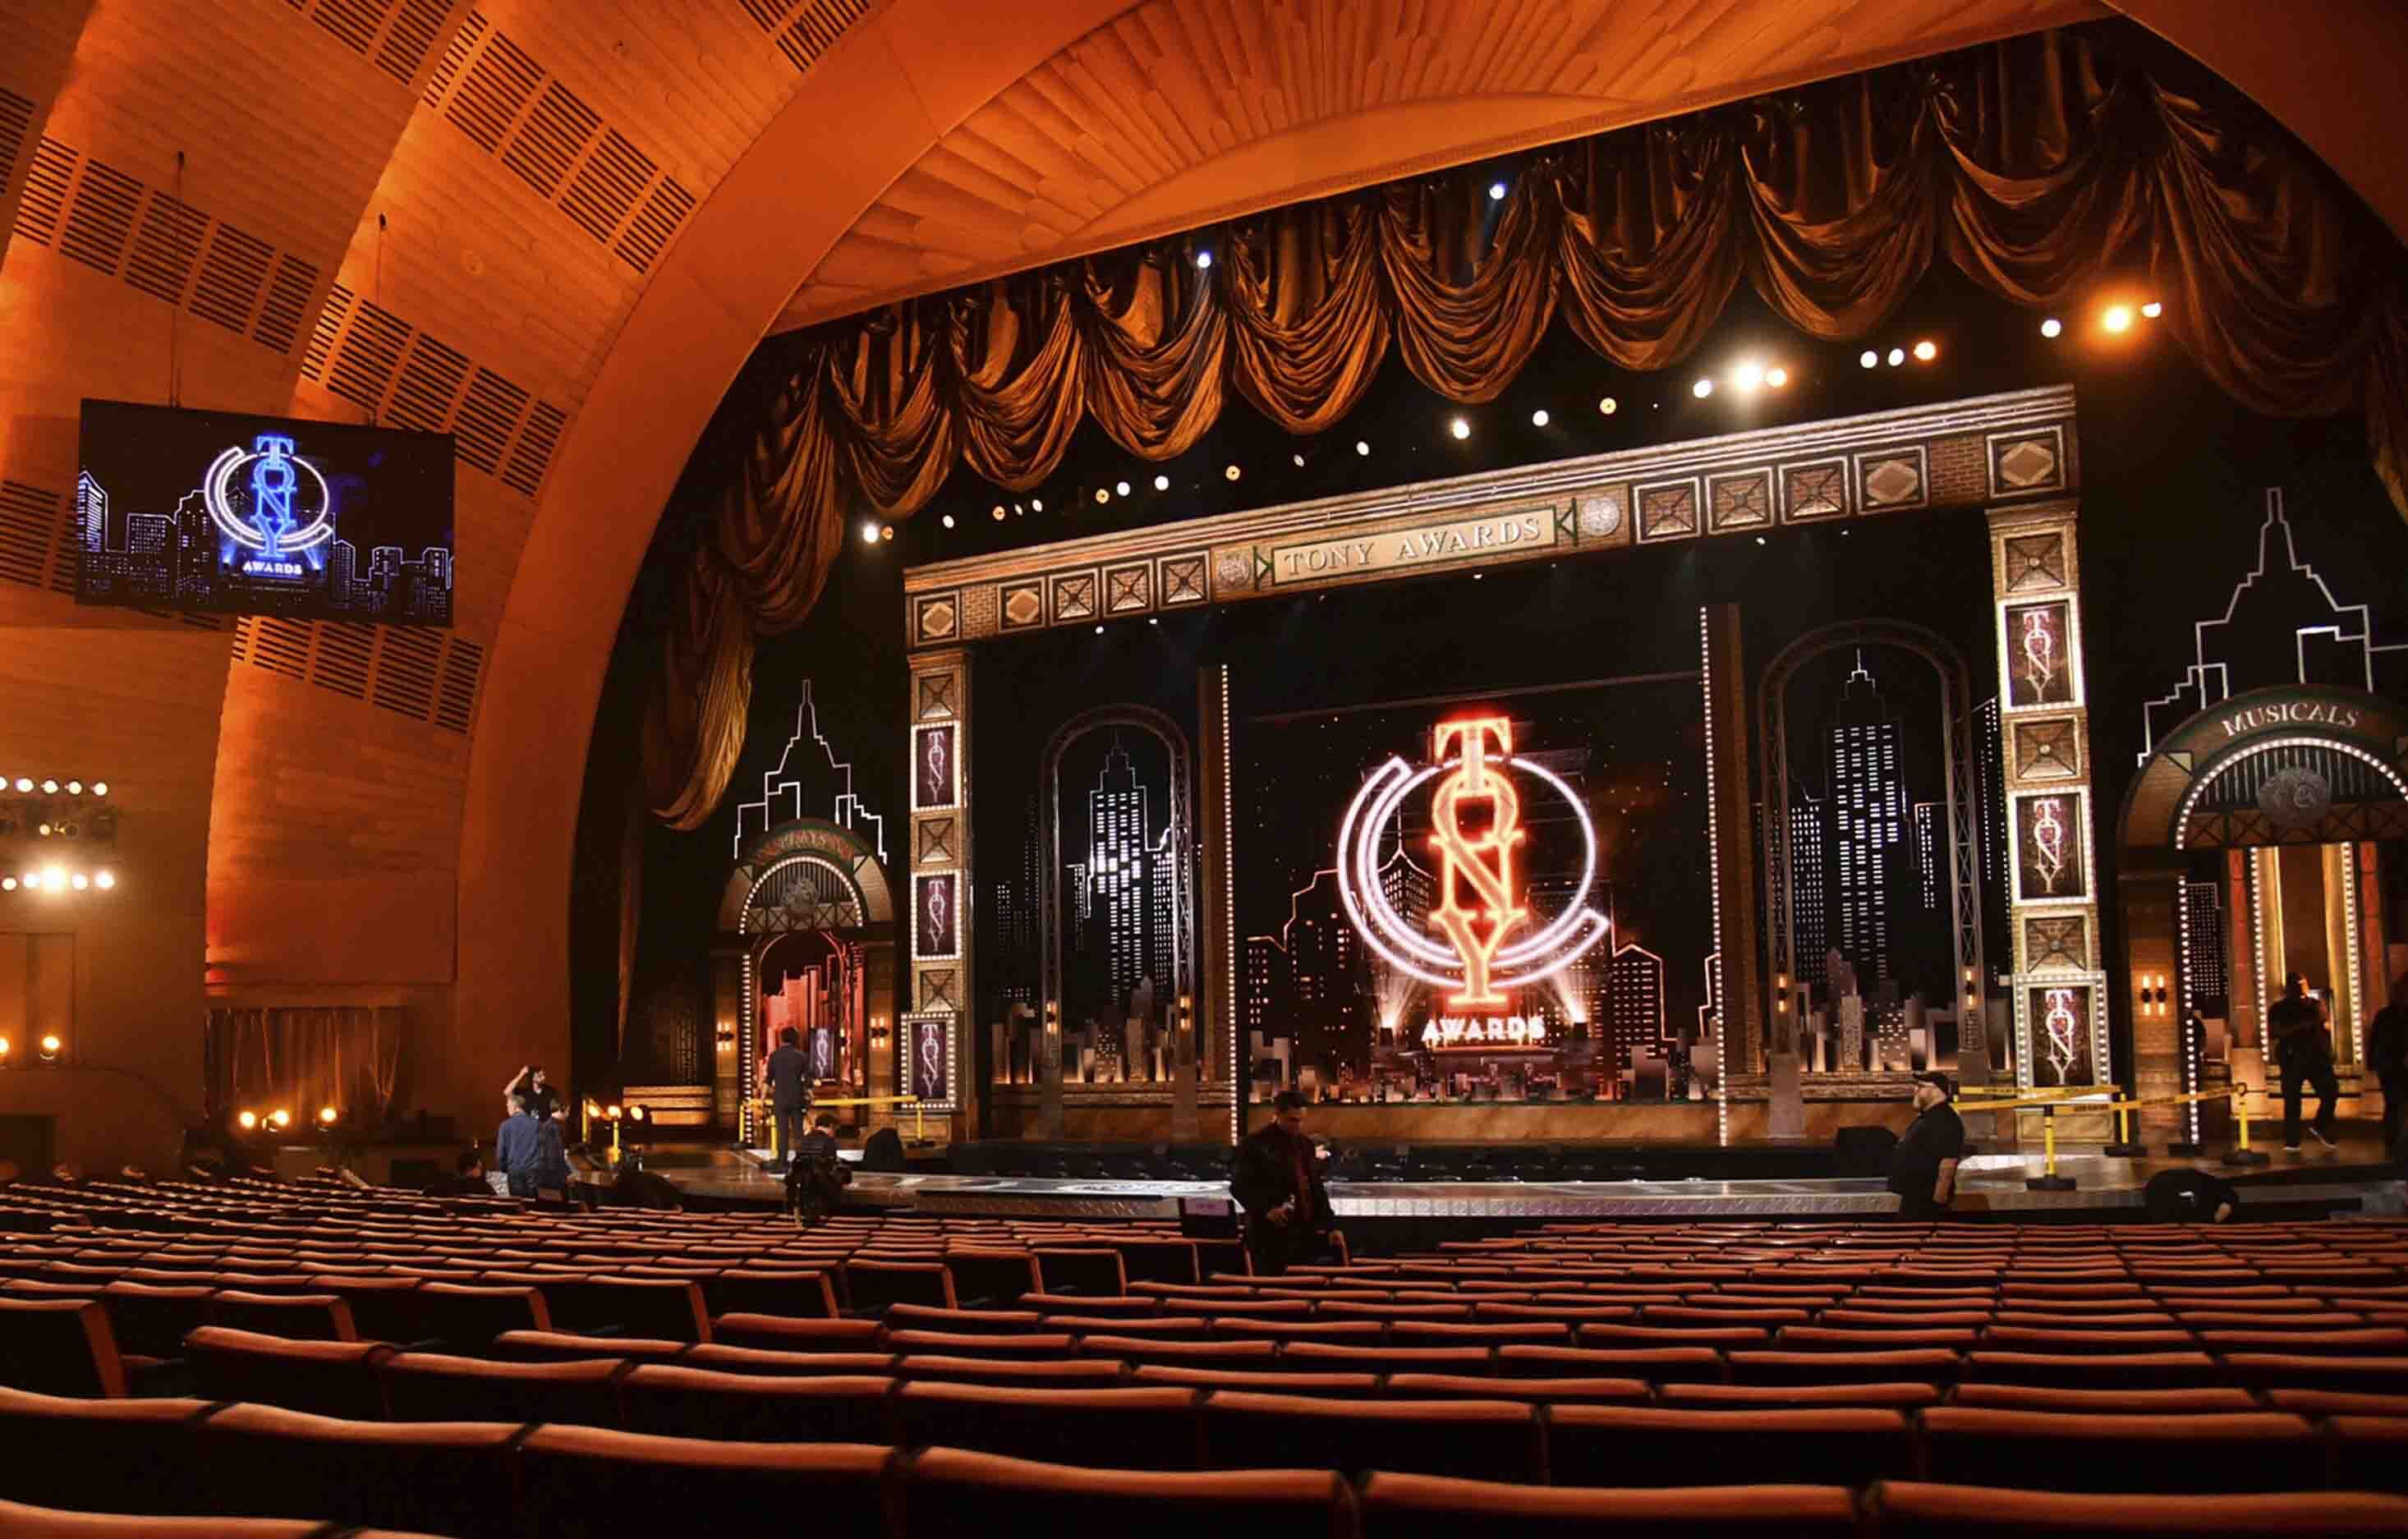 Tony Awards to return to Radio City Music Hall in June